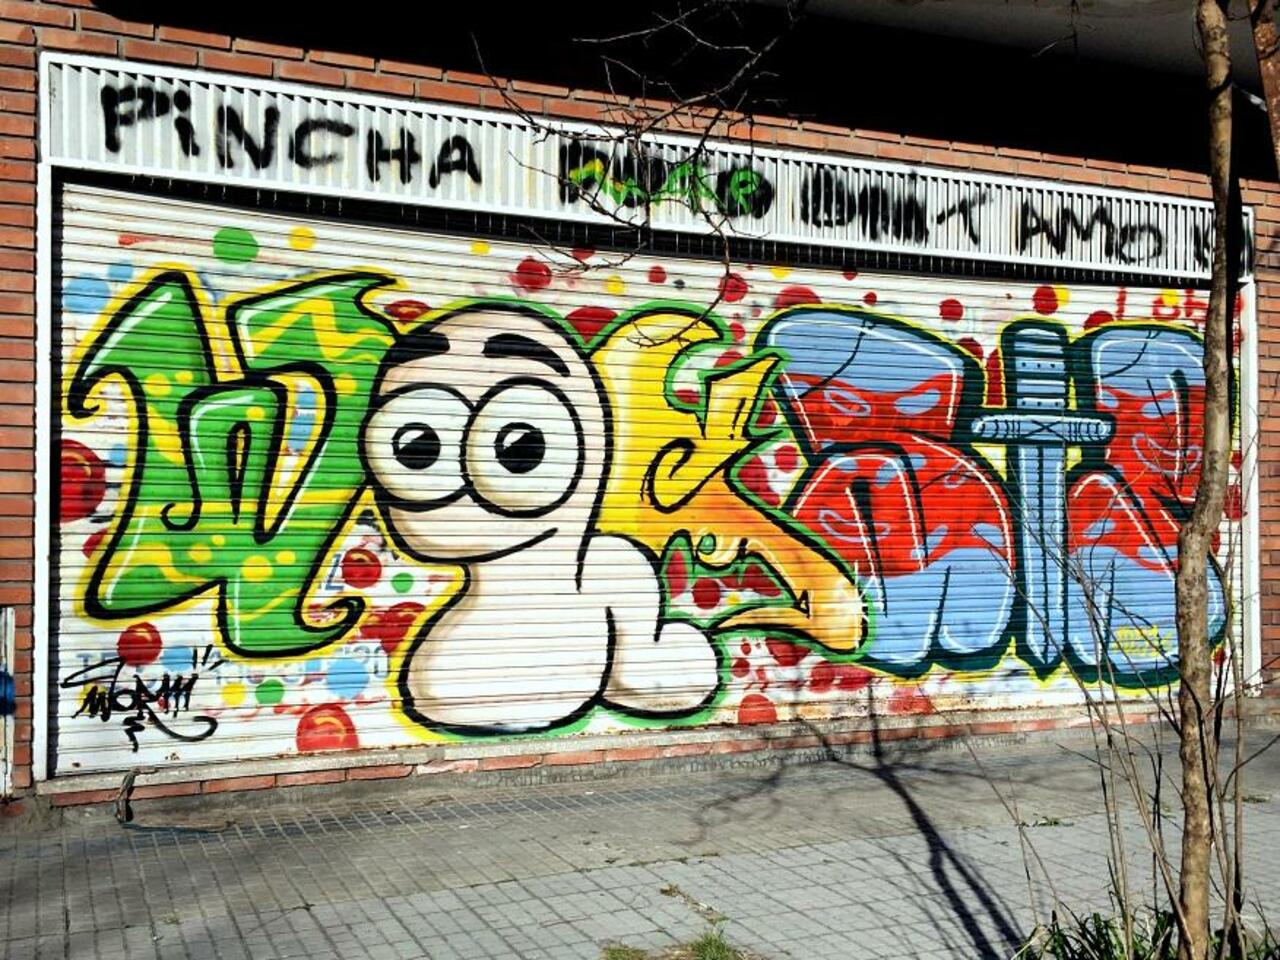 #Graffiti de hoy: <Another happy little ghost> calle 17, 65y66 #LaPlata #Argentina #StreetArt #UrbanArt #ArteUrbano http://t.co/juOv13p6b9